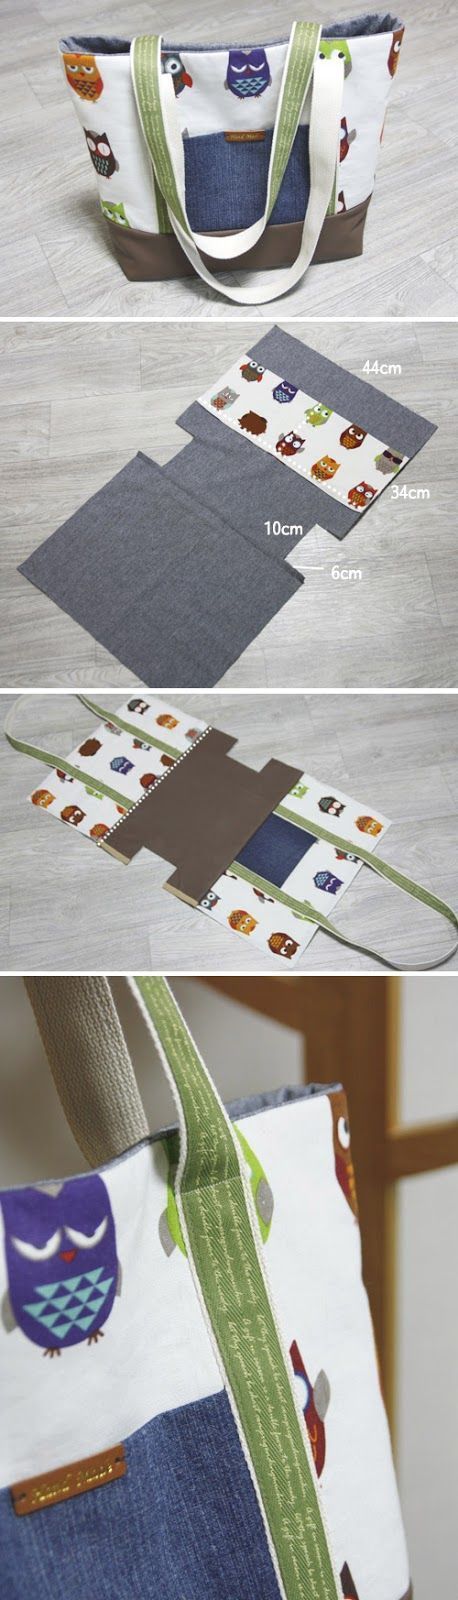 Easy Canvas Tote Bag with Pocket. Step by step DIY Tutorial. http://www.handmadiya.com/2015/11/diy-canvas-tote-bag.html